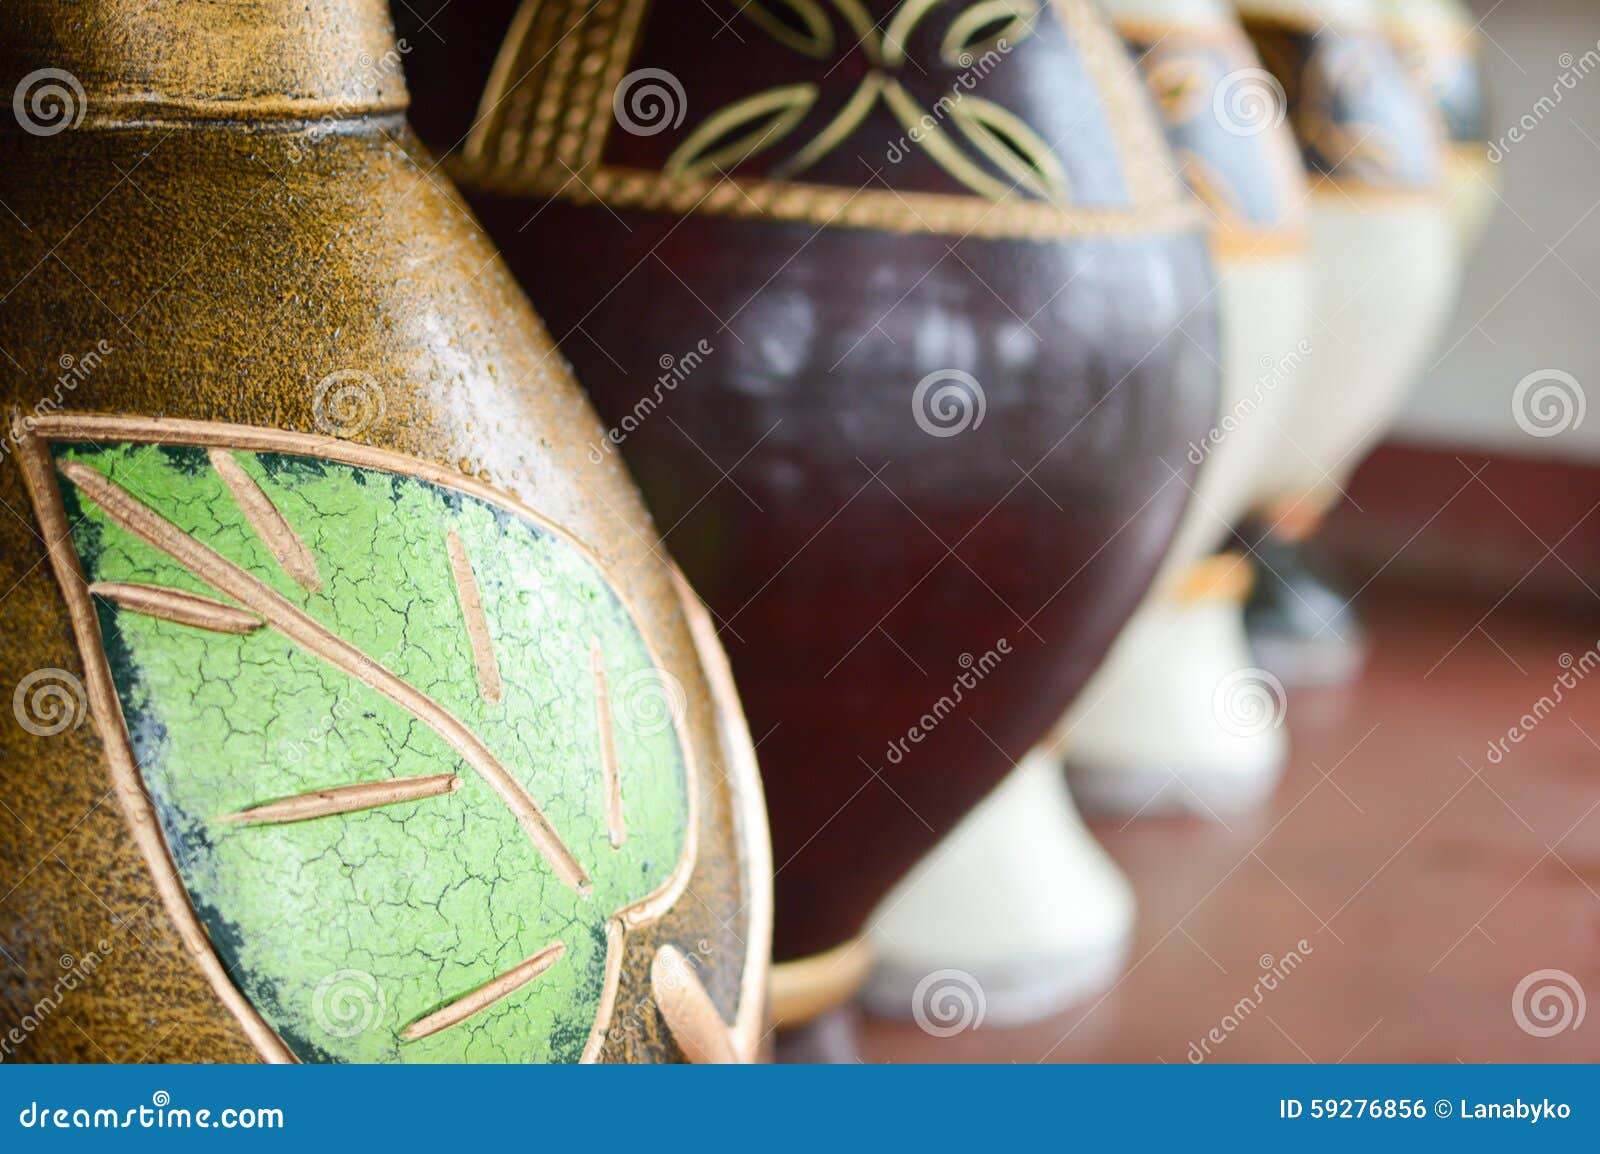 ceramic handycrafts in the shops along the main road of san juan oriente in the highlands between granada and masaya, nicara